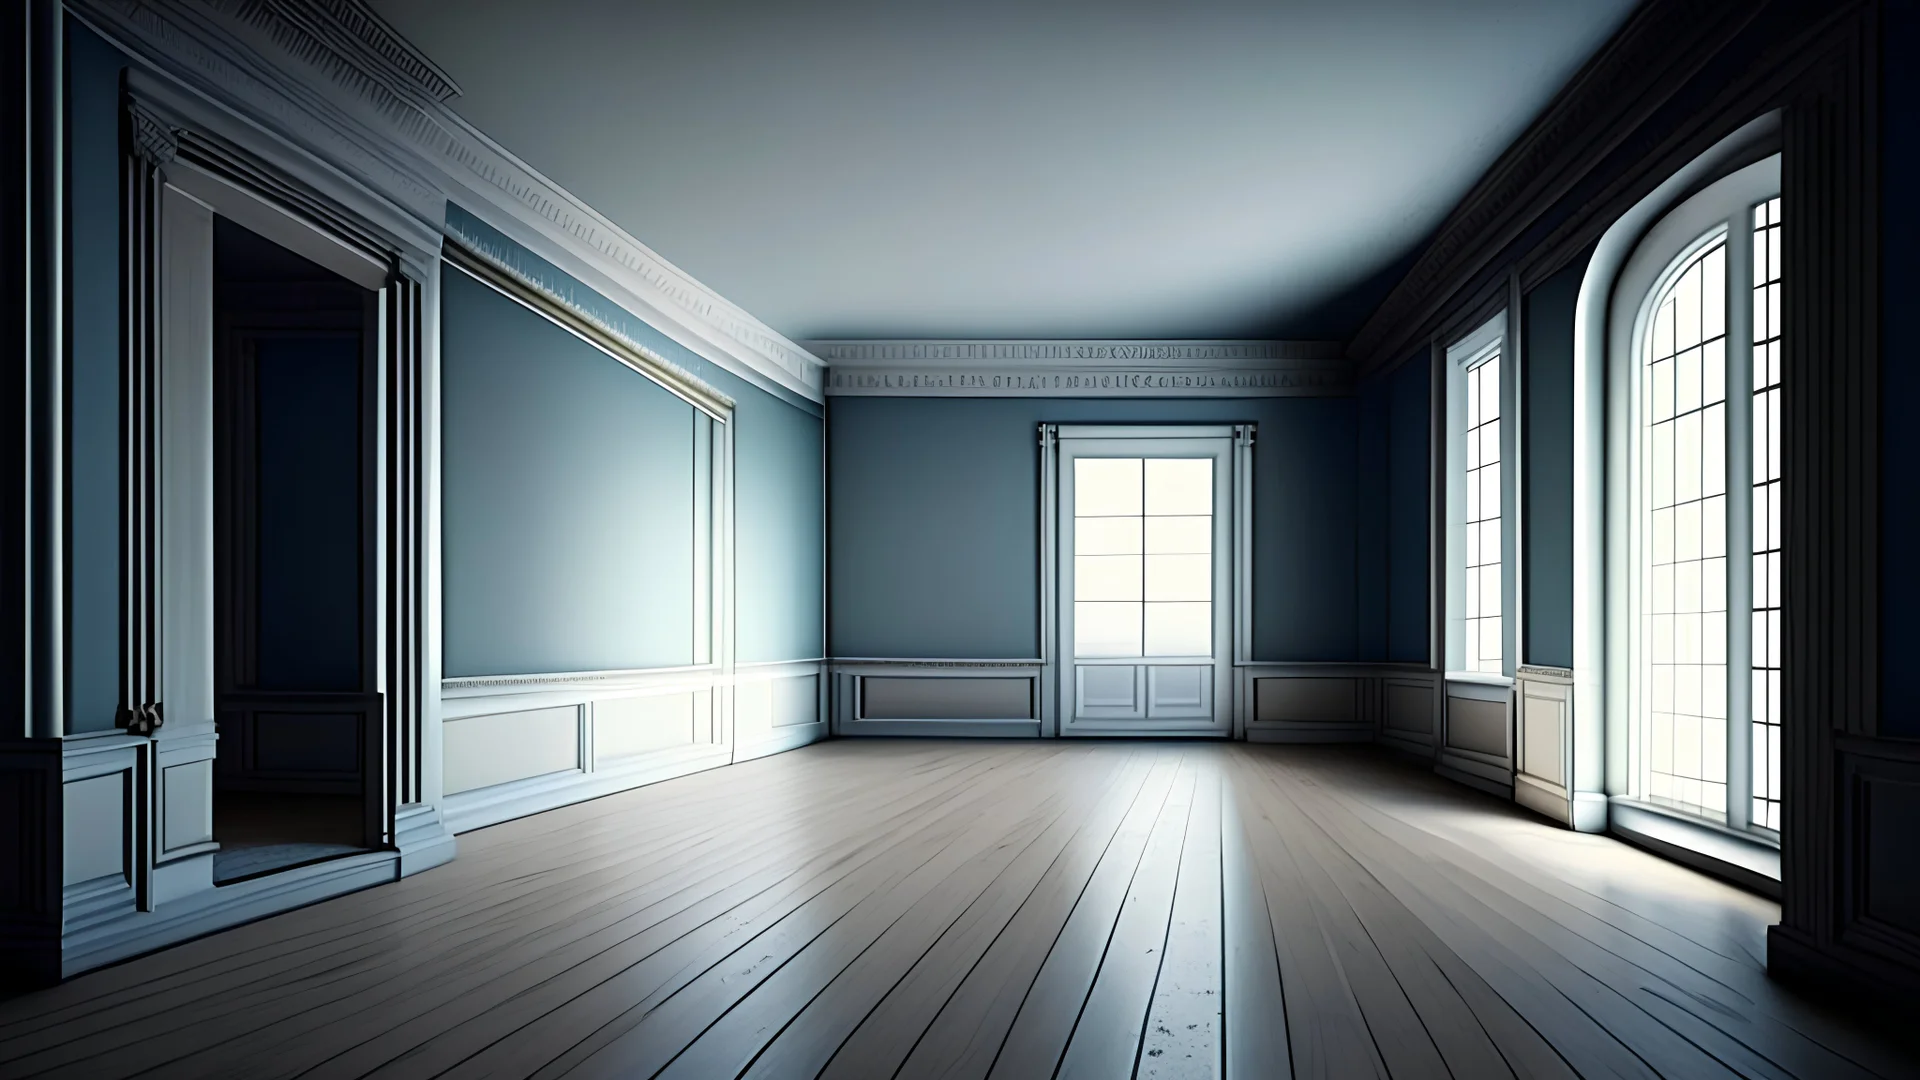 Classical empty room